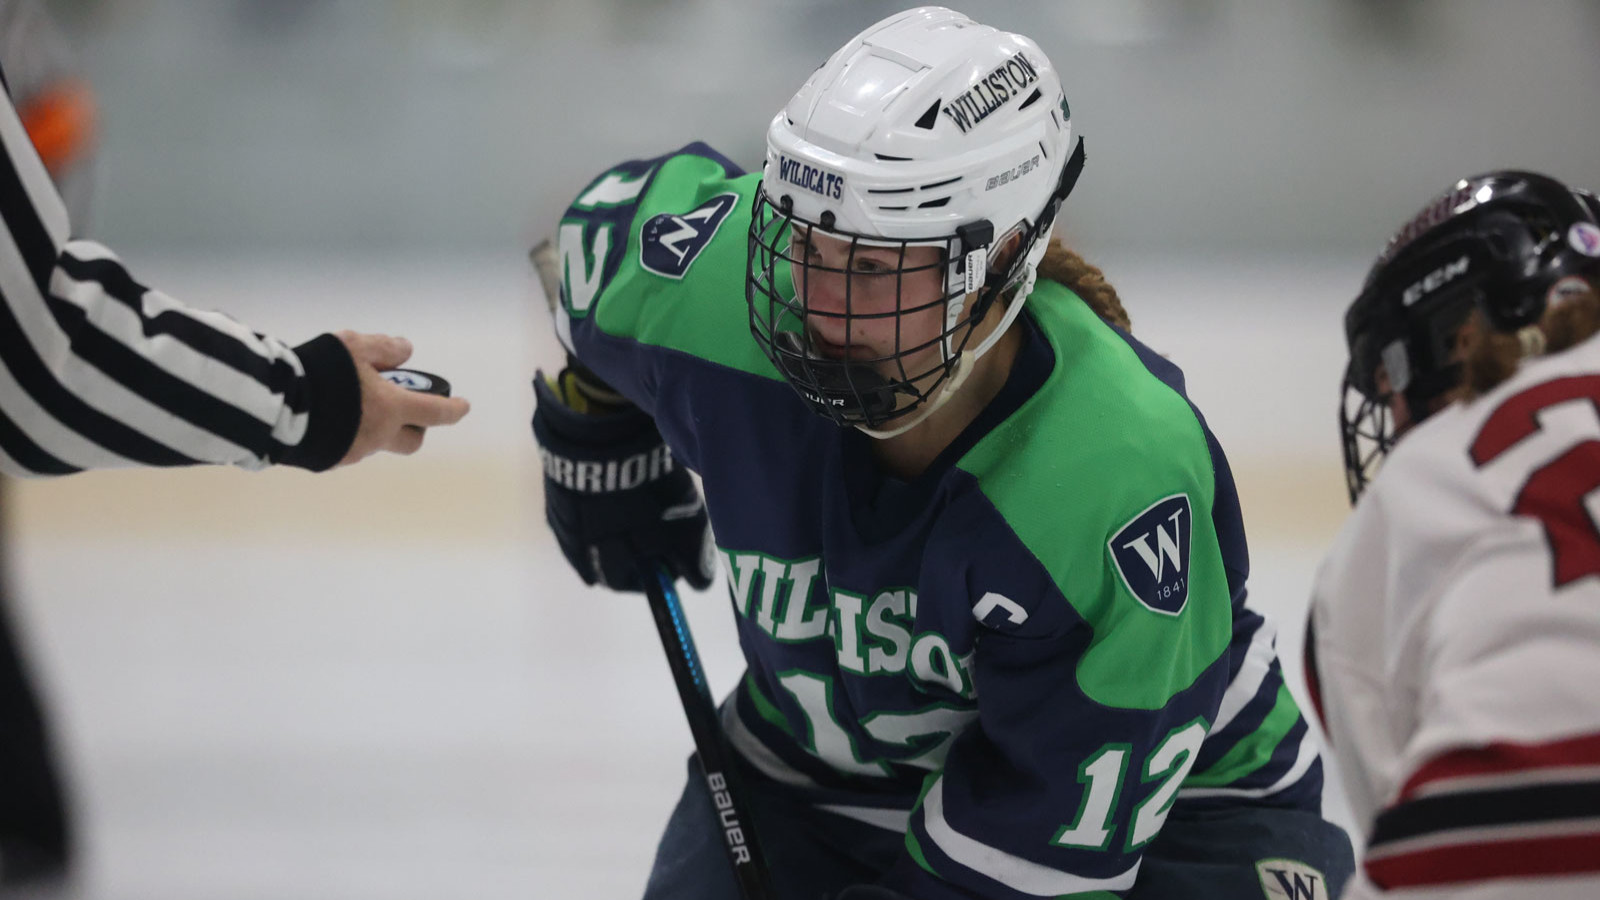 girl playing hockey in uniform and helmet